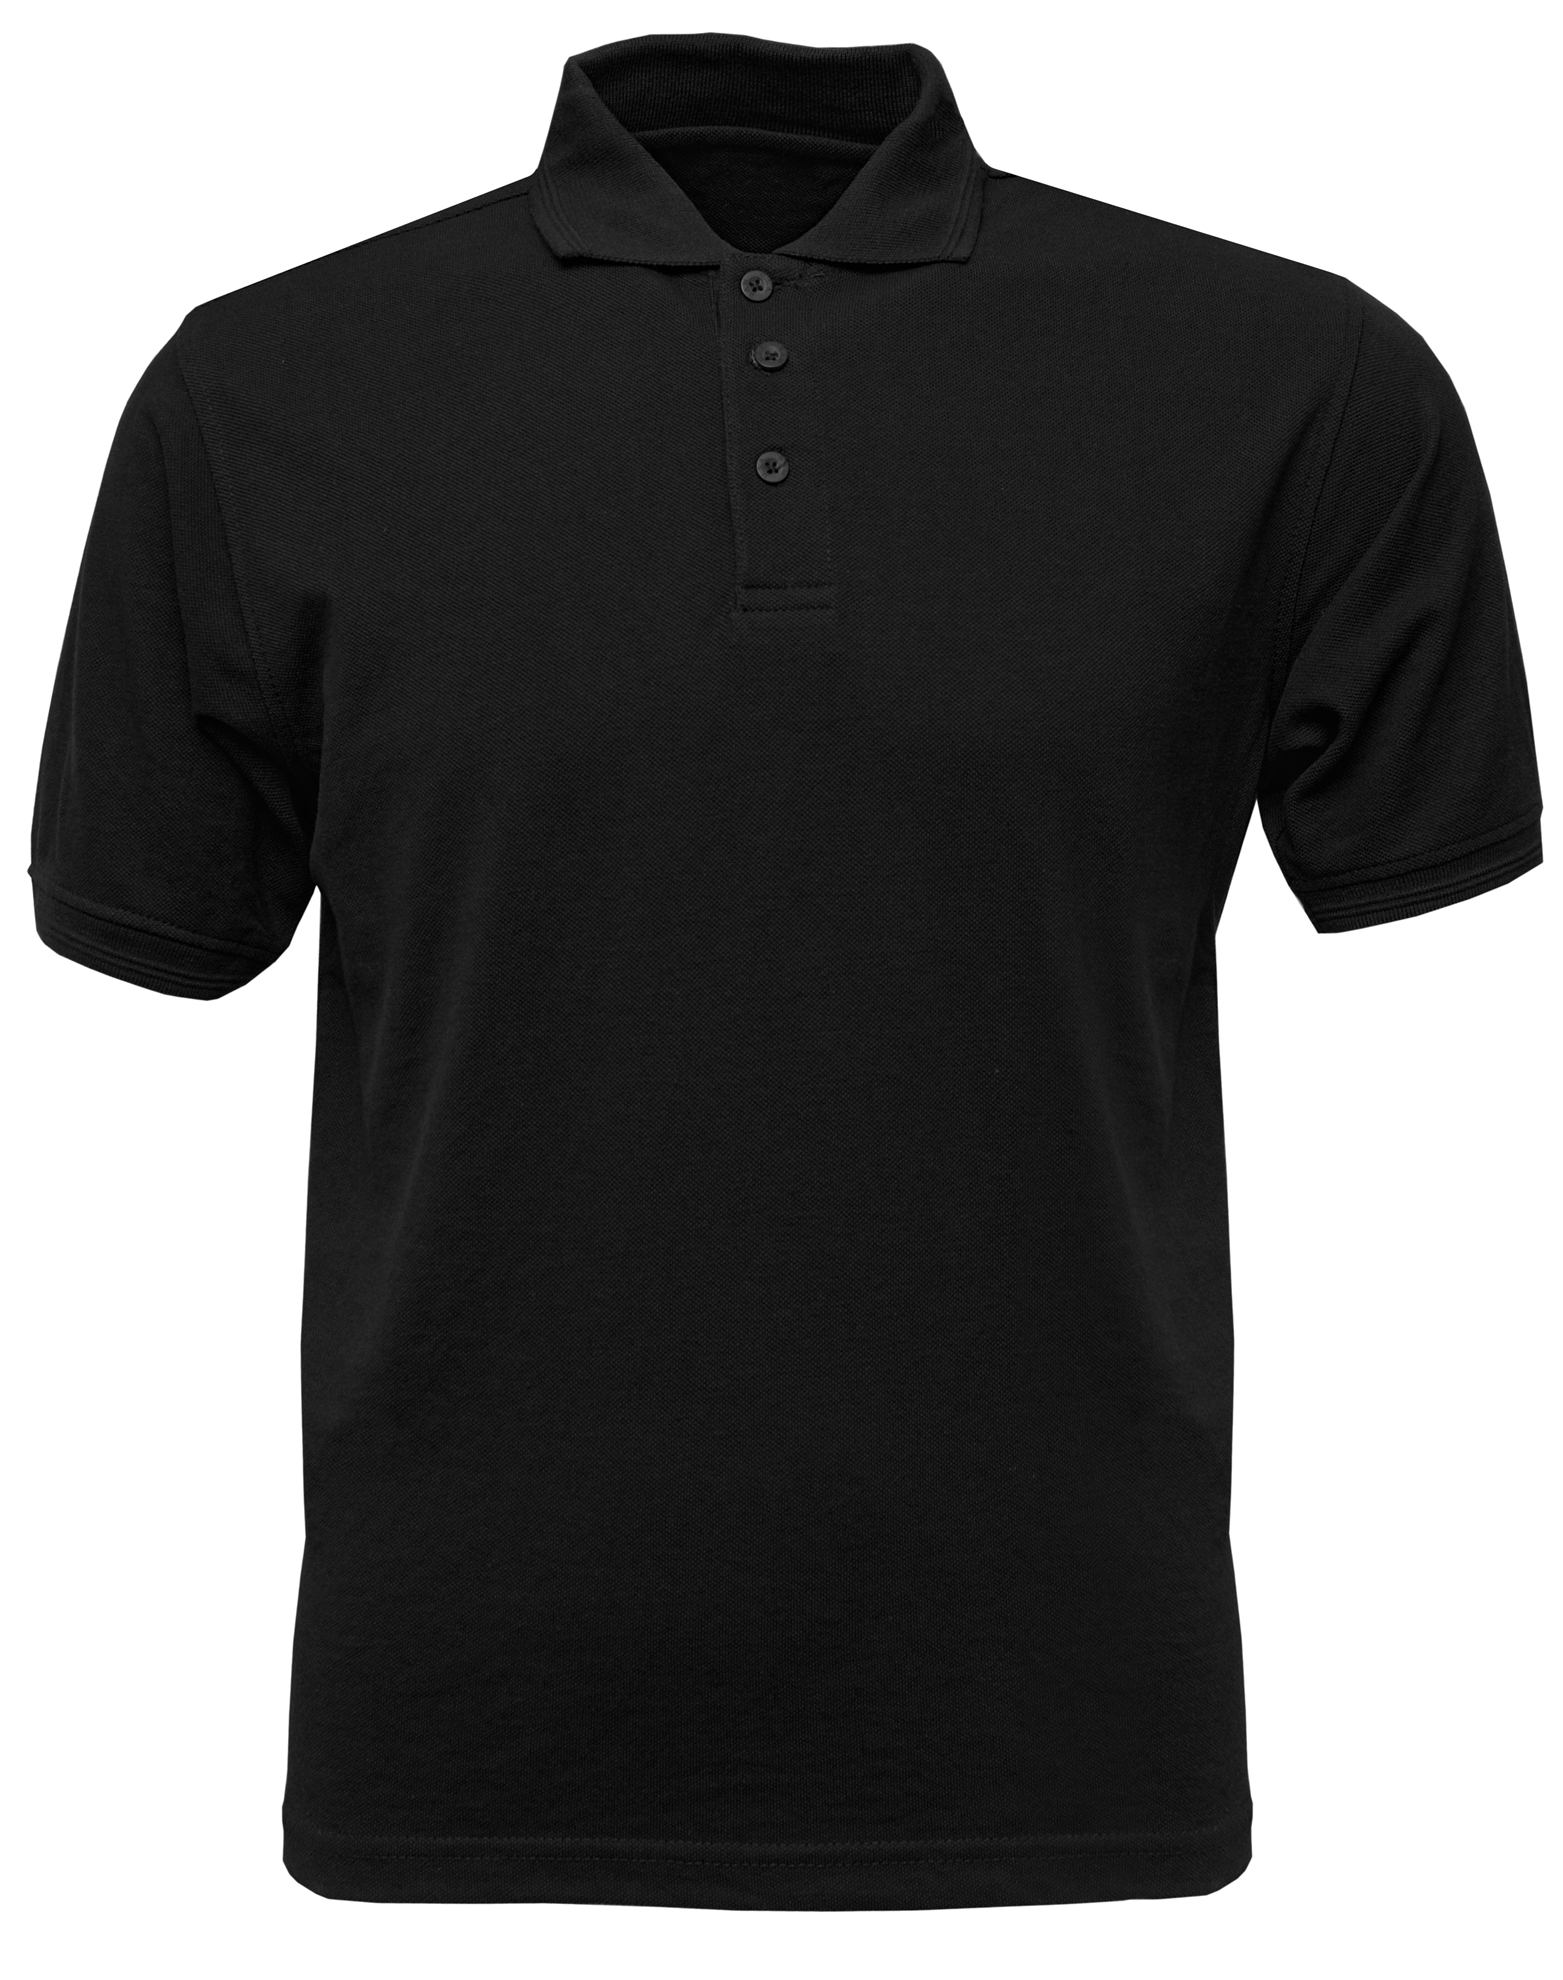 BAW Athletic Wear ED365Y - Youth Everyday Polo Short Sleeve